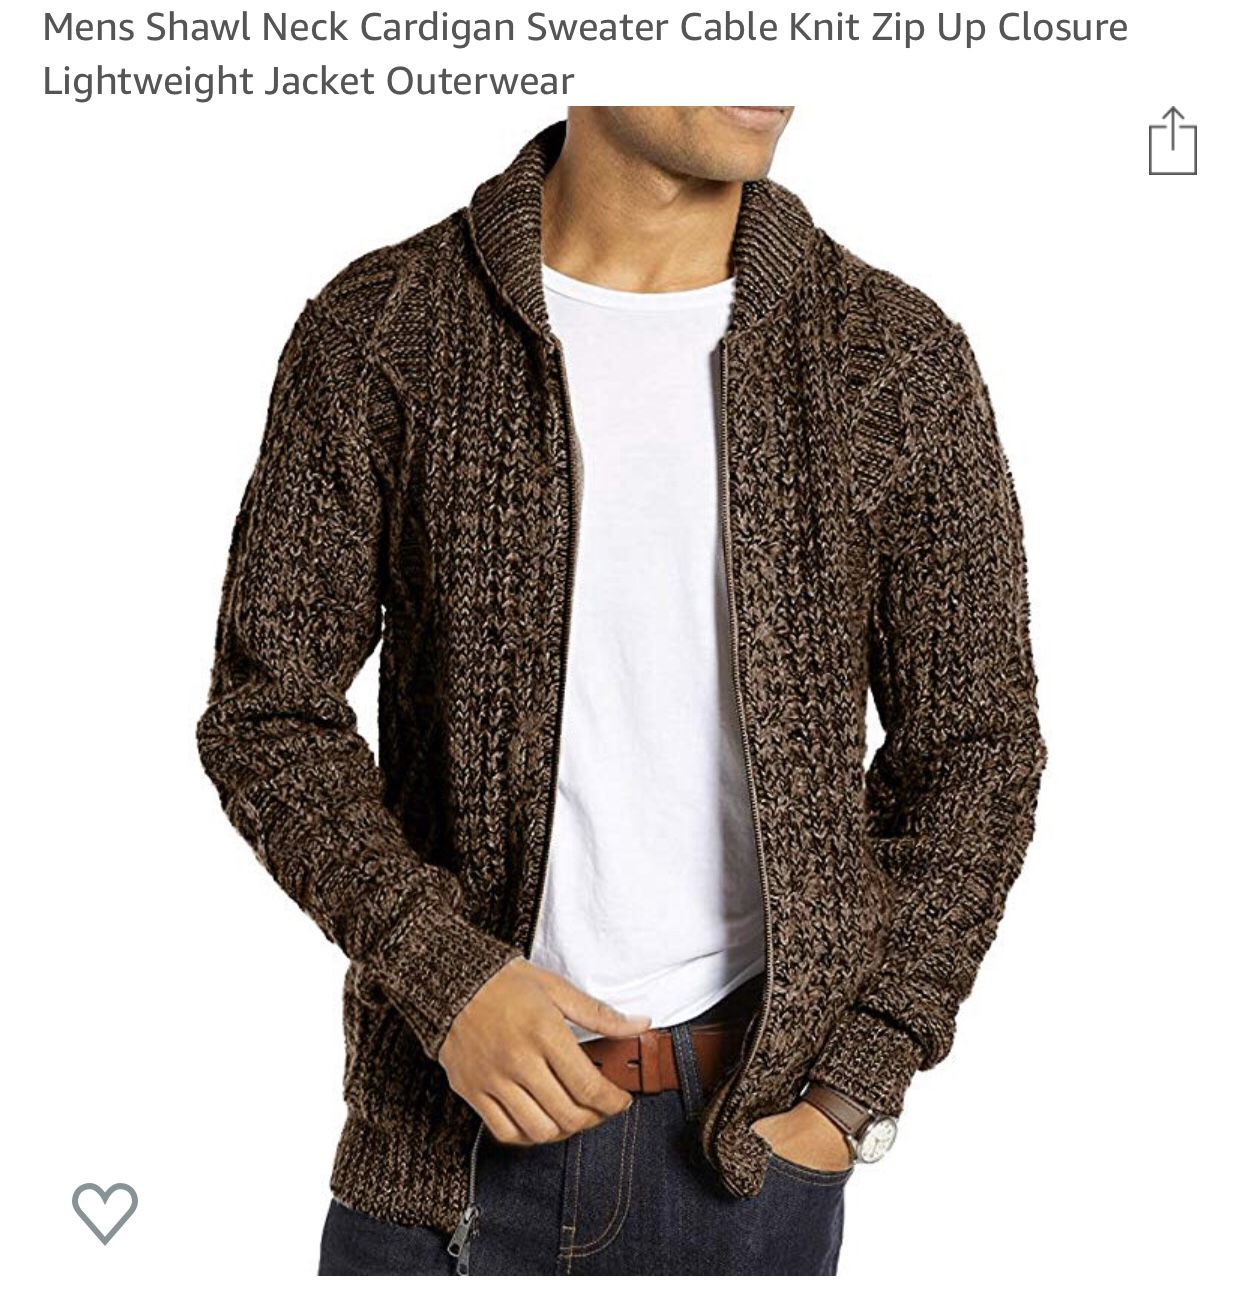 Brand new men’s cardigan sweater